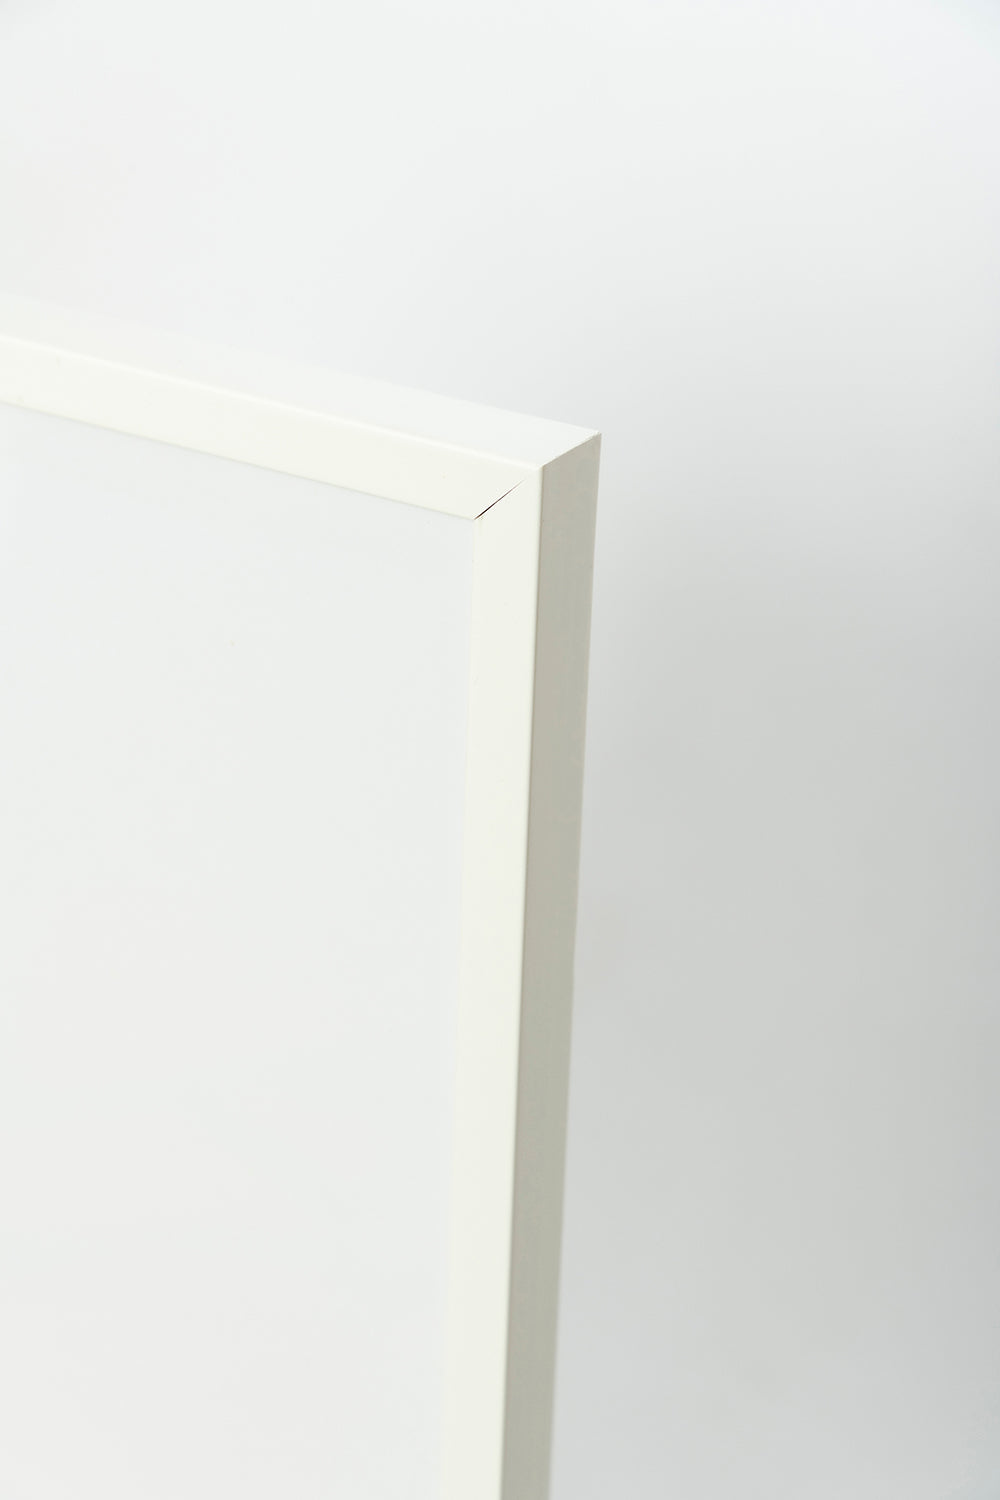 White Frame with Plexiglass